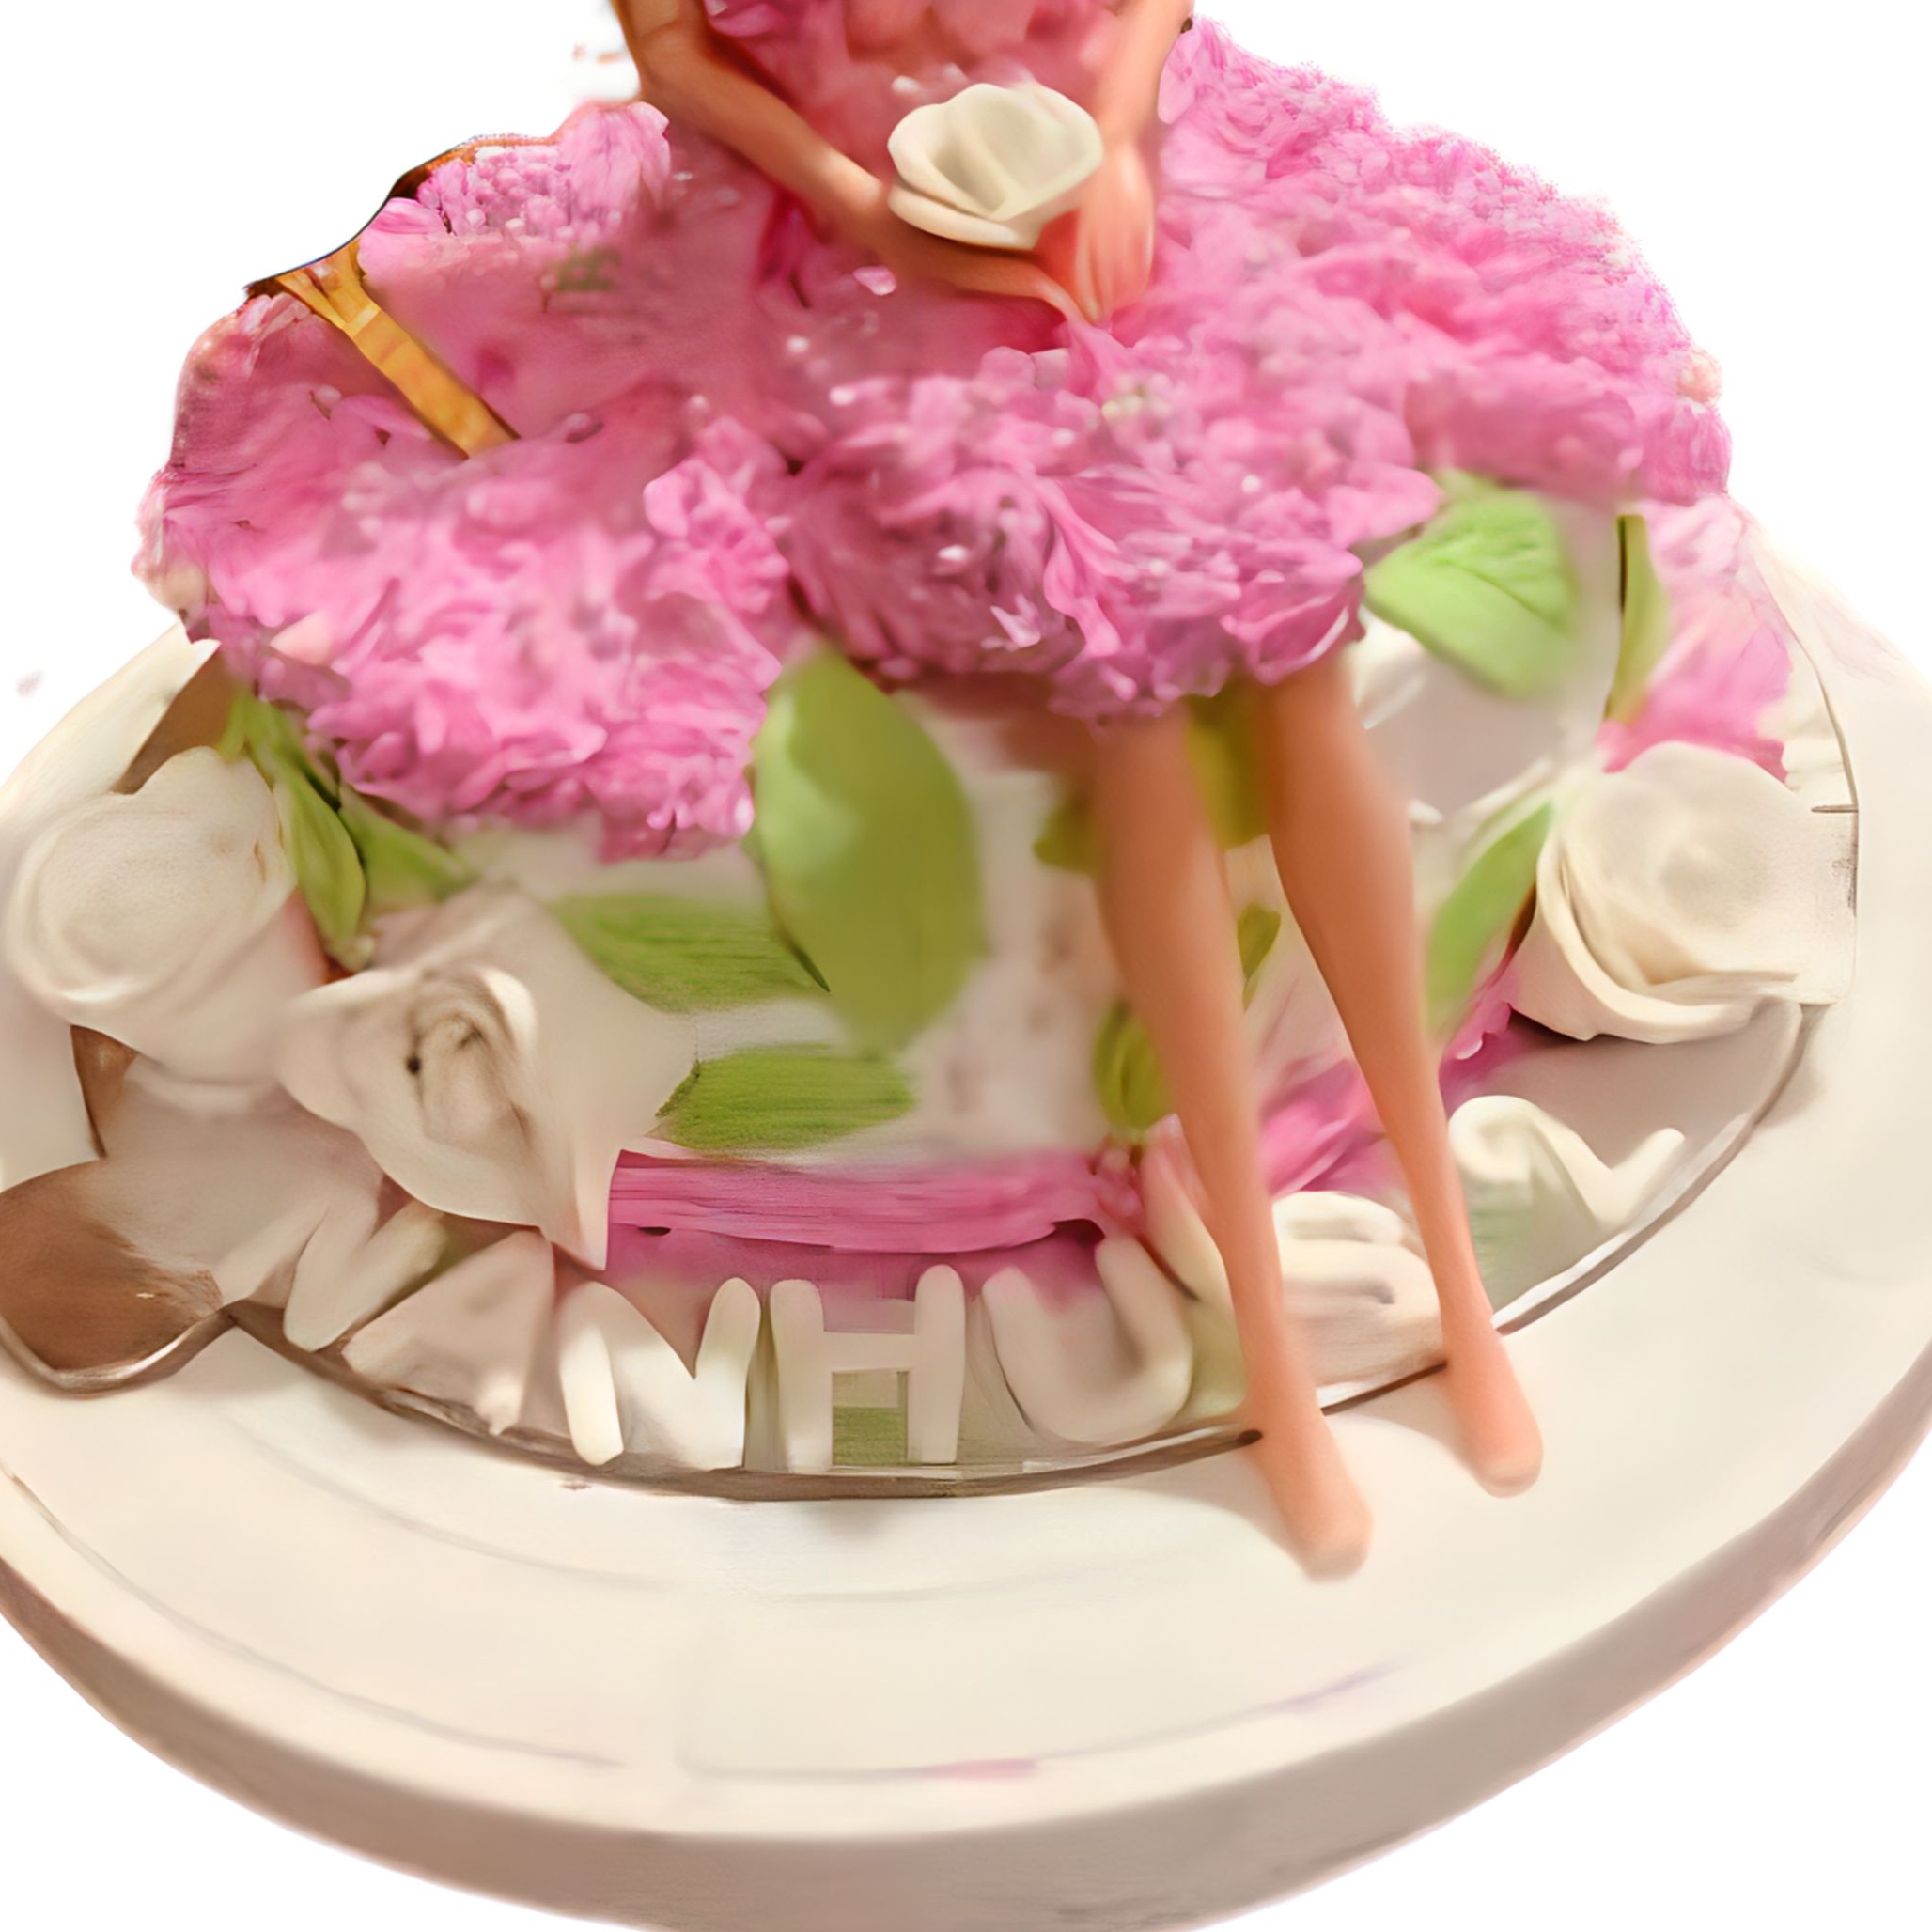 Special Barbie Doll Cake